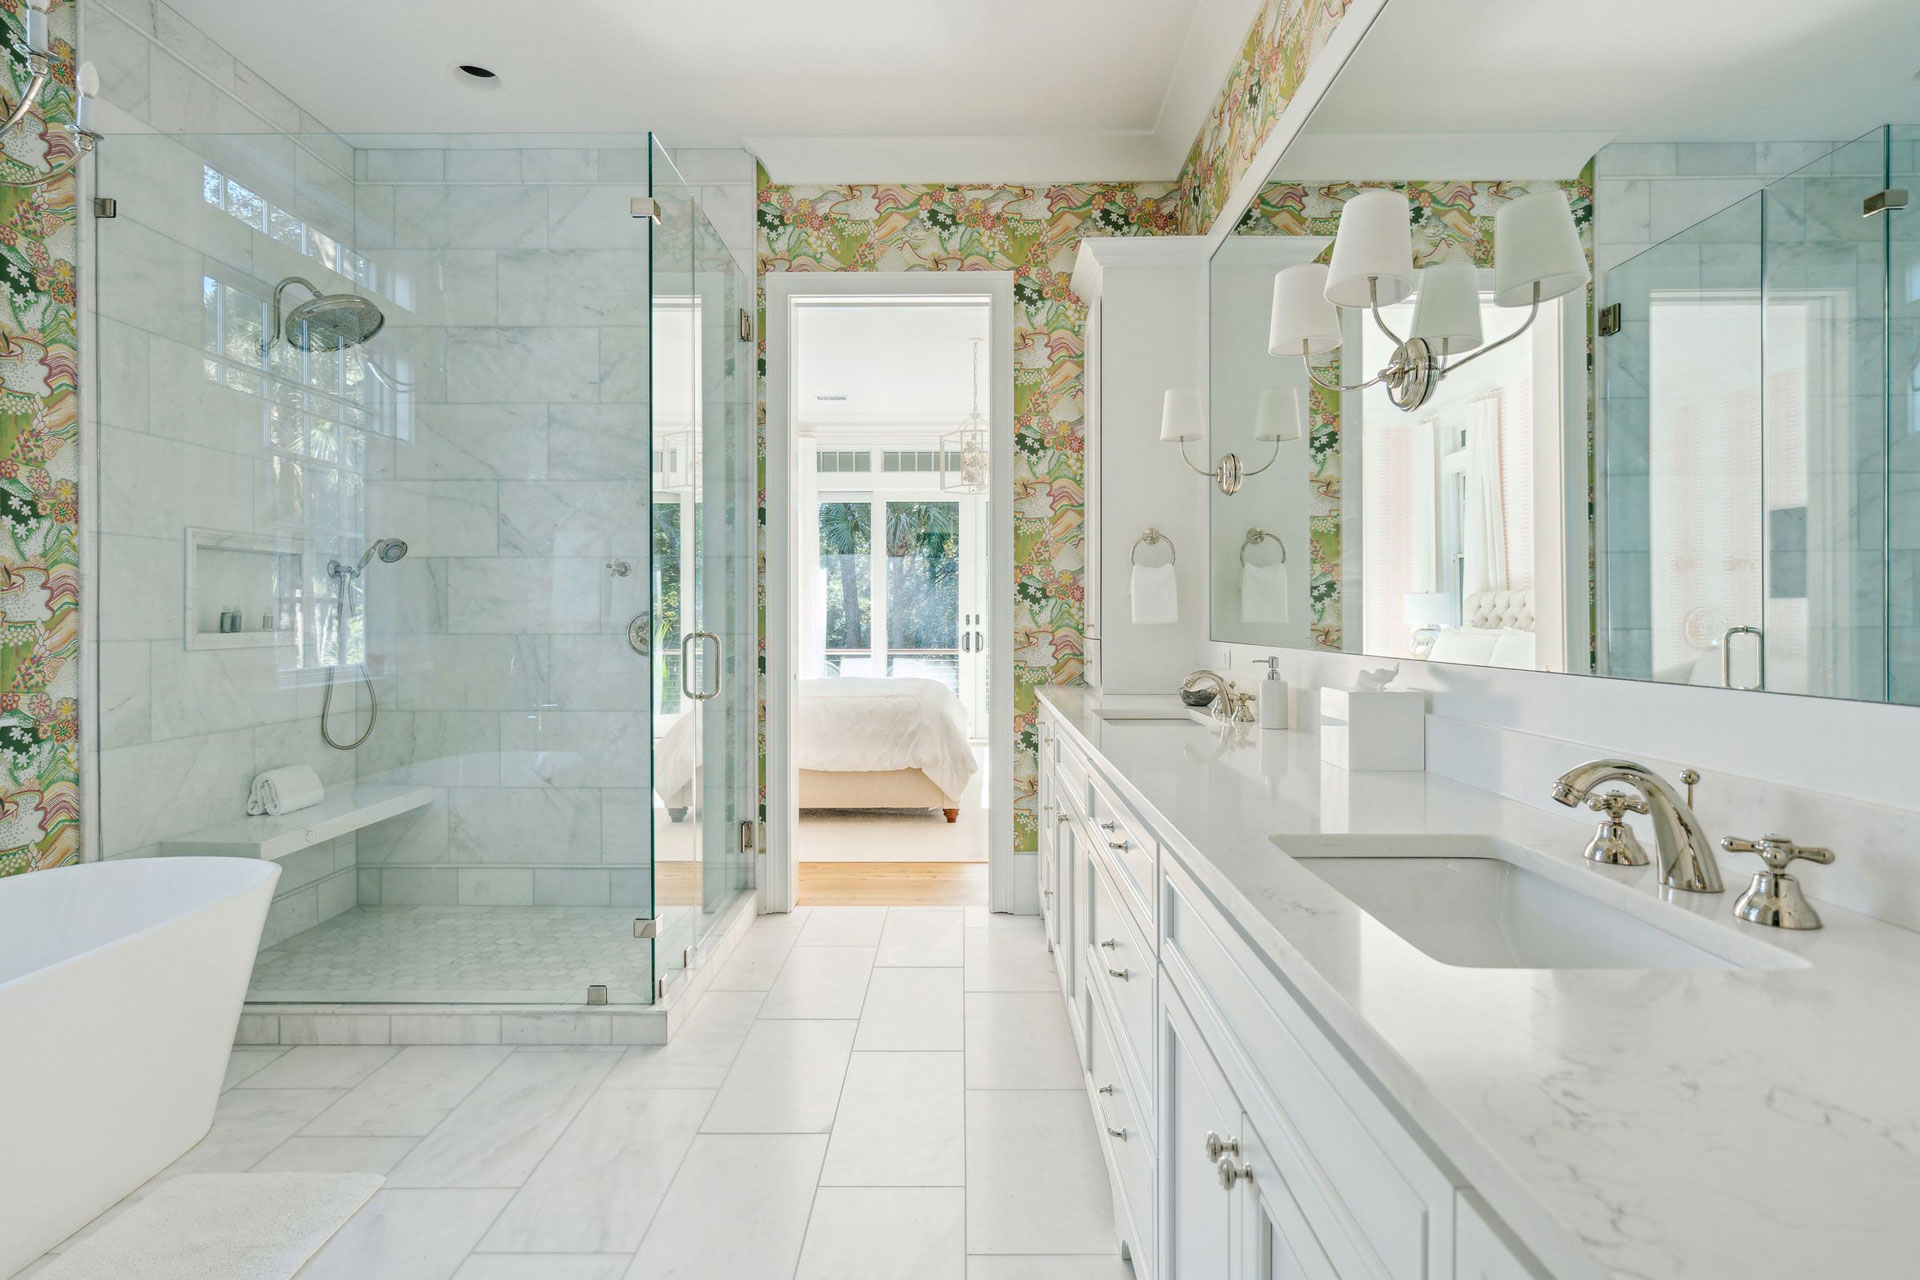 Classic, coastal bathroom with marble shower, separate tub, double custom vanity